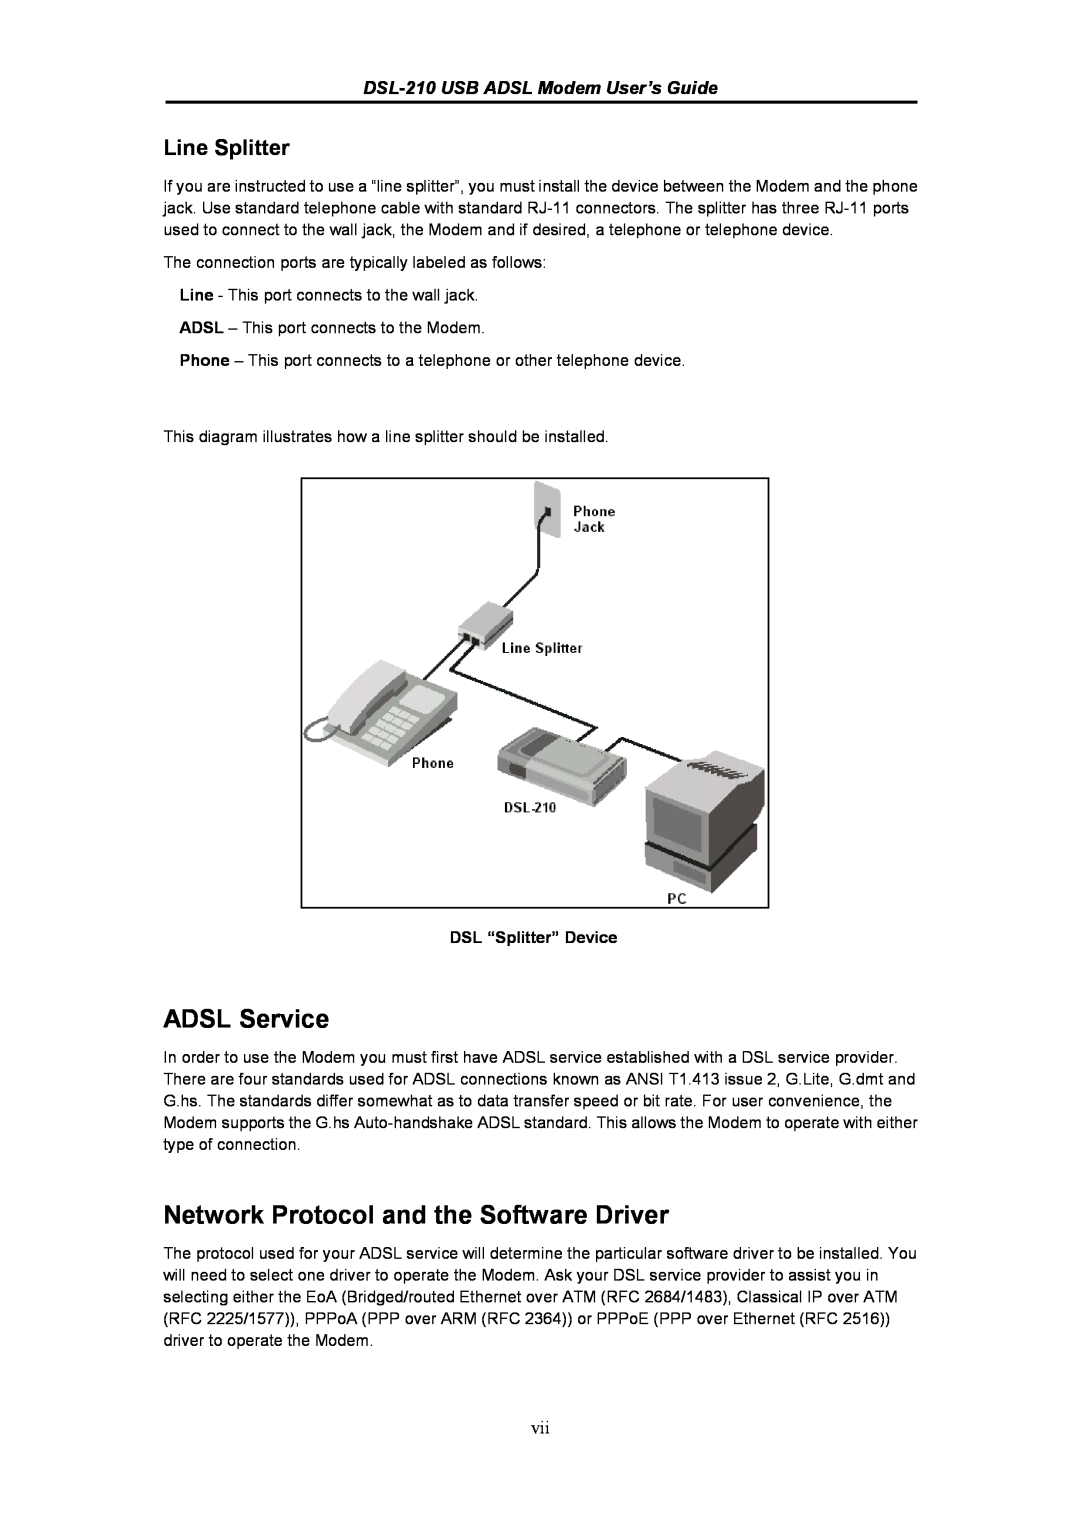 D-Link manual ADSL Service, Network Protocol and the Software Driver, Line Splitter, DSL-210 USB ADSL Modem User’s Guide 